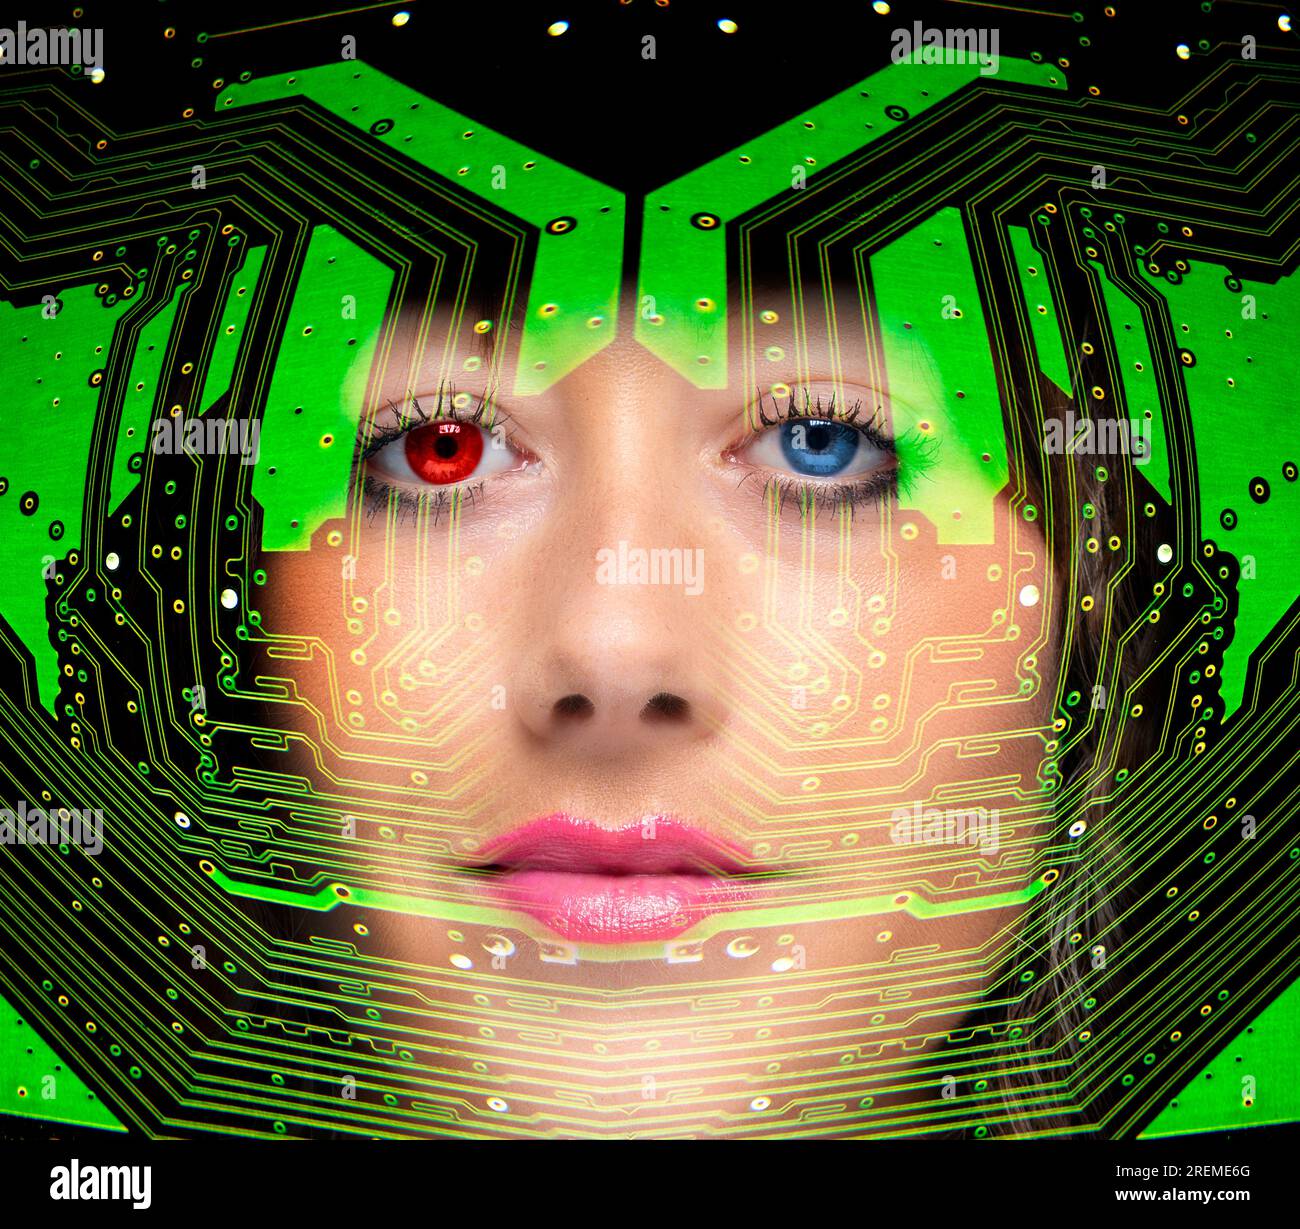 Artificial intelligence, conceptual composite image. Stock Photo